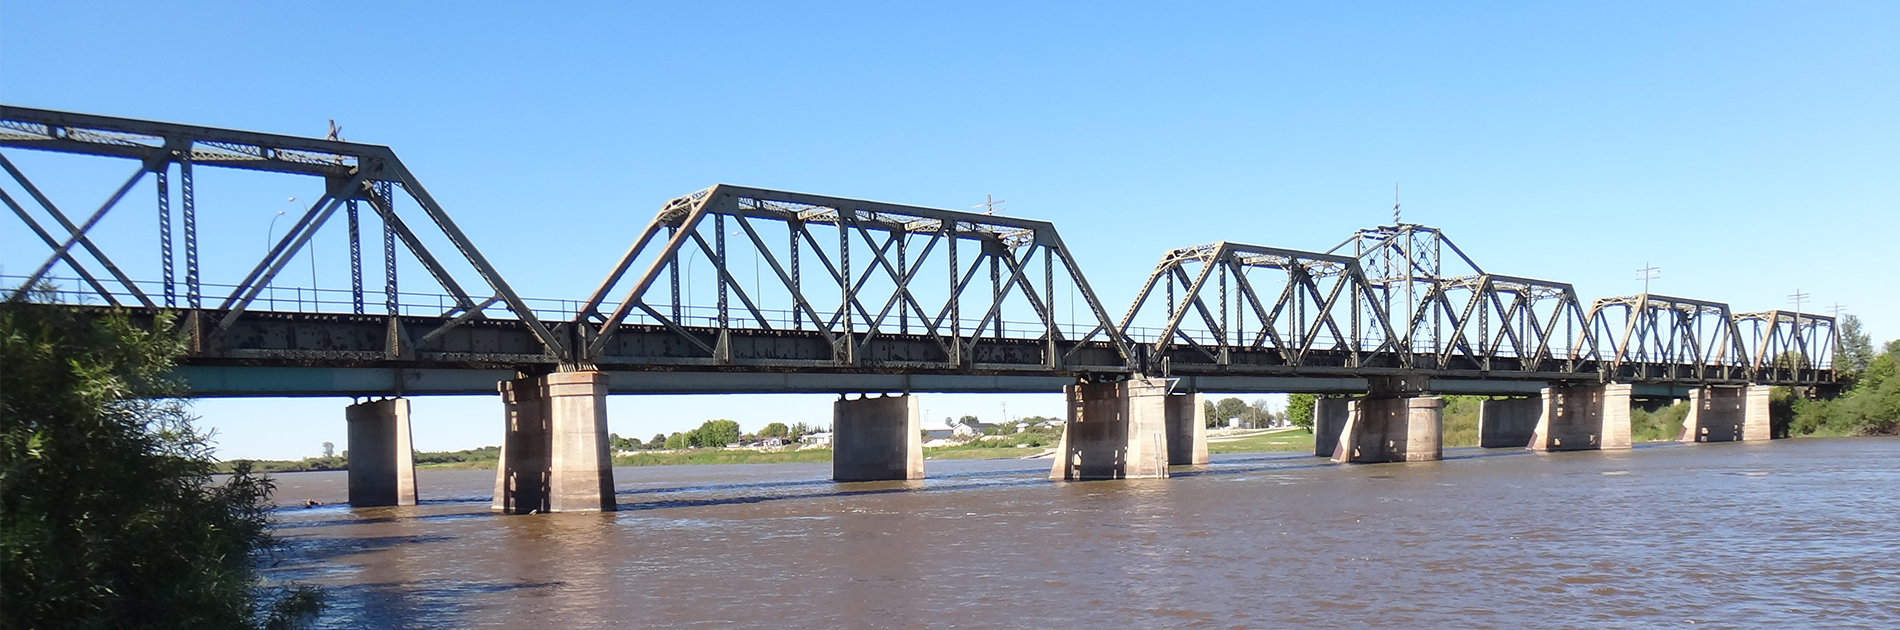 The rail bridge over the Saskatchewan River